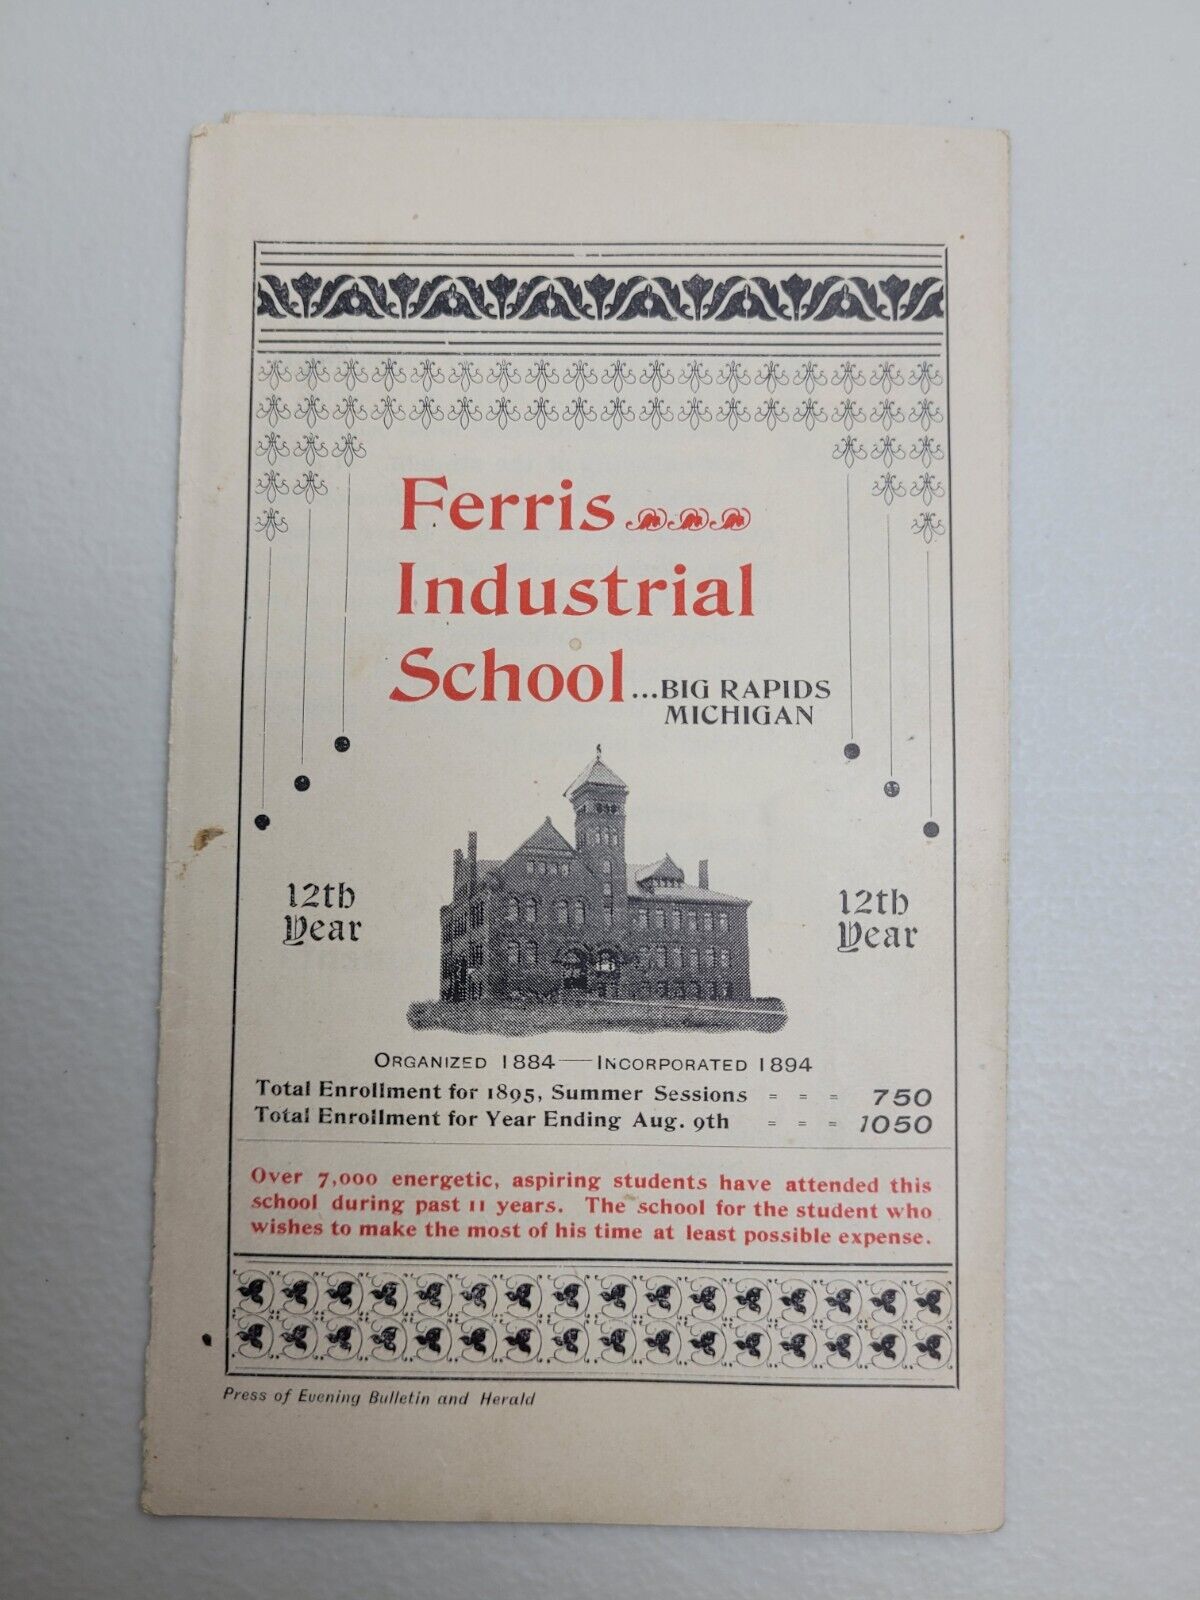 Ferris College Industrial School Enrollment 1895 Brochure Big Rapids Michigan